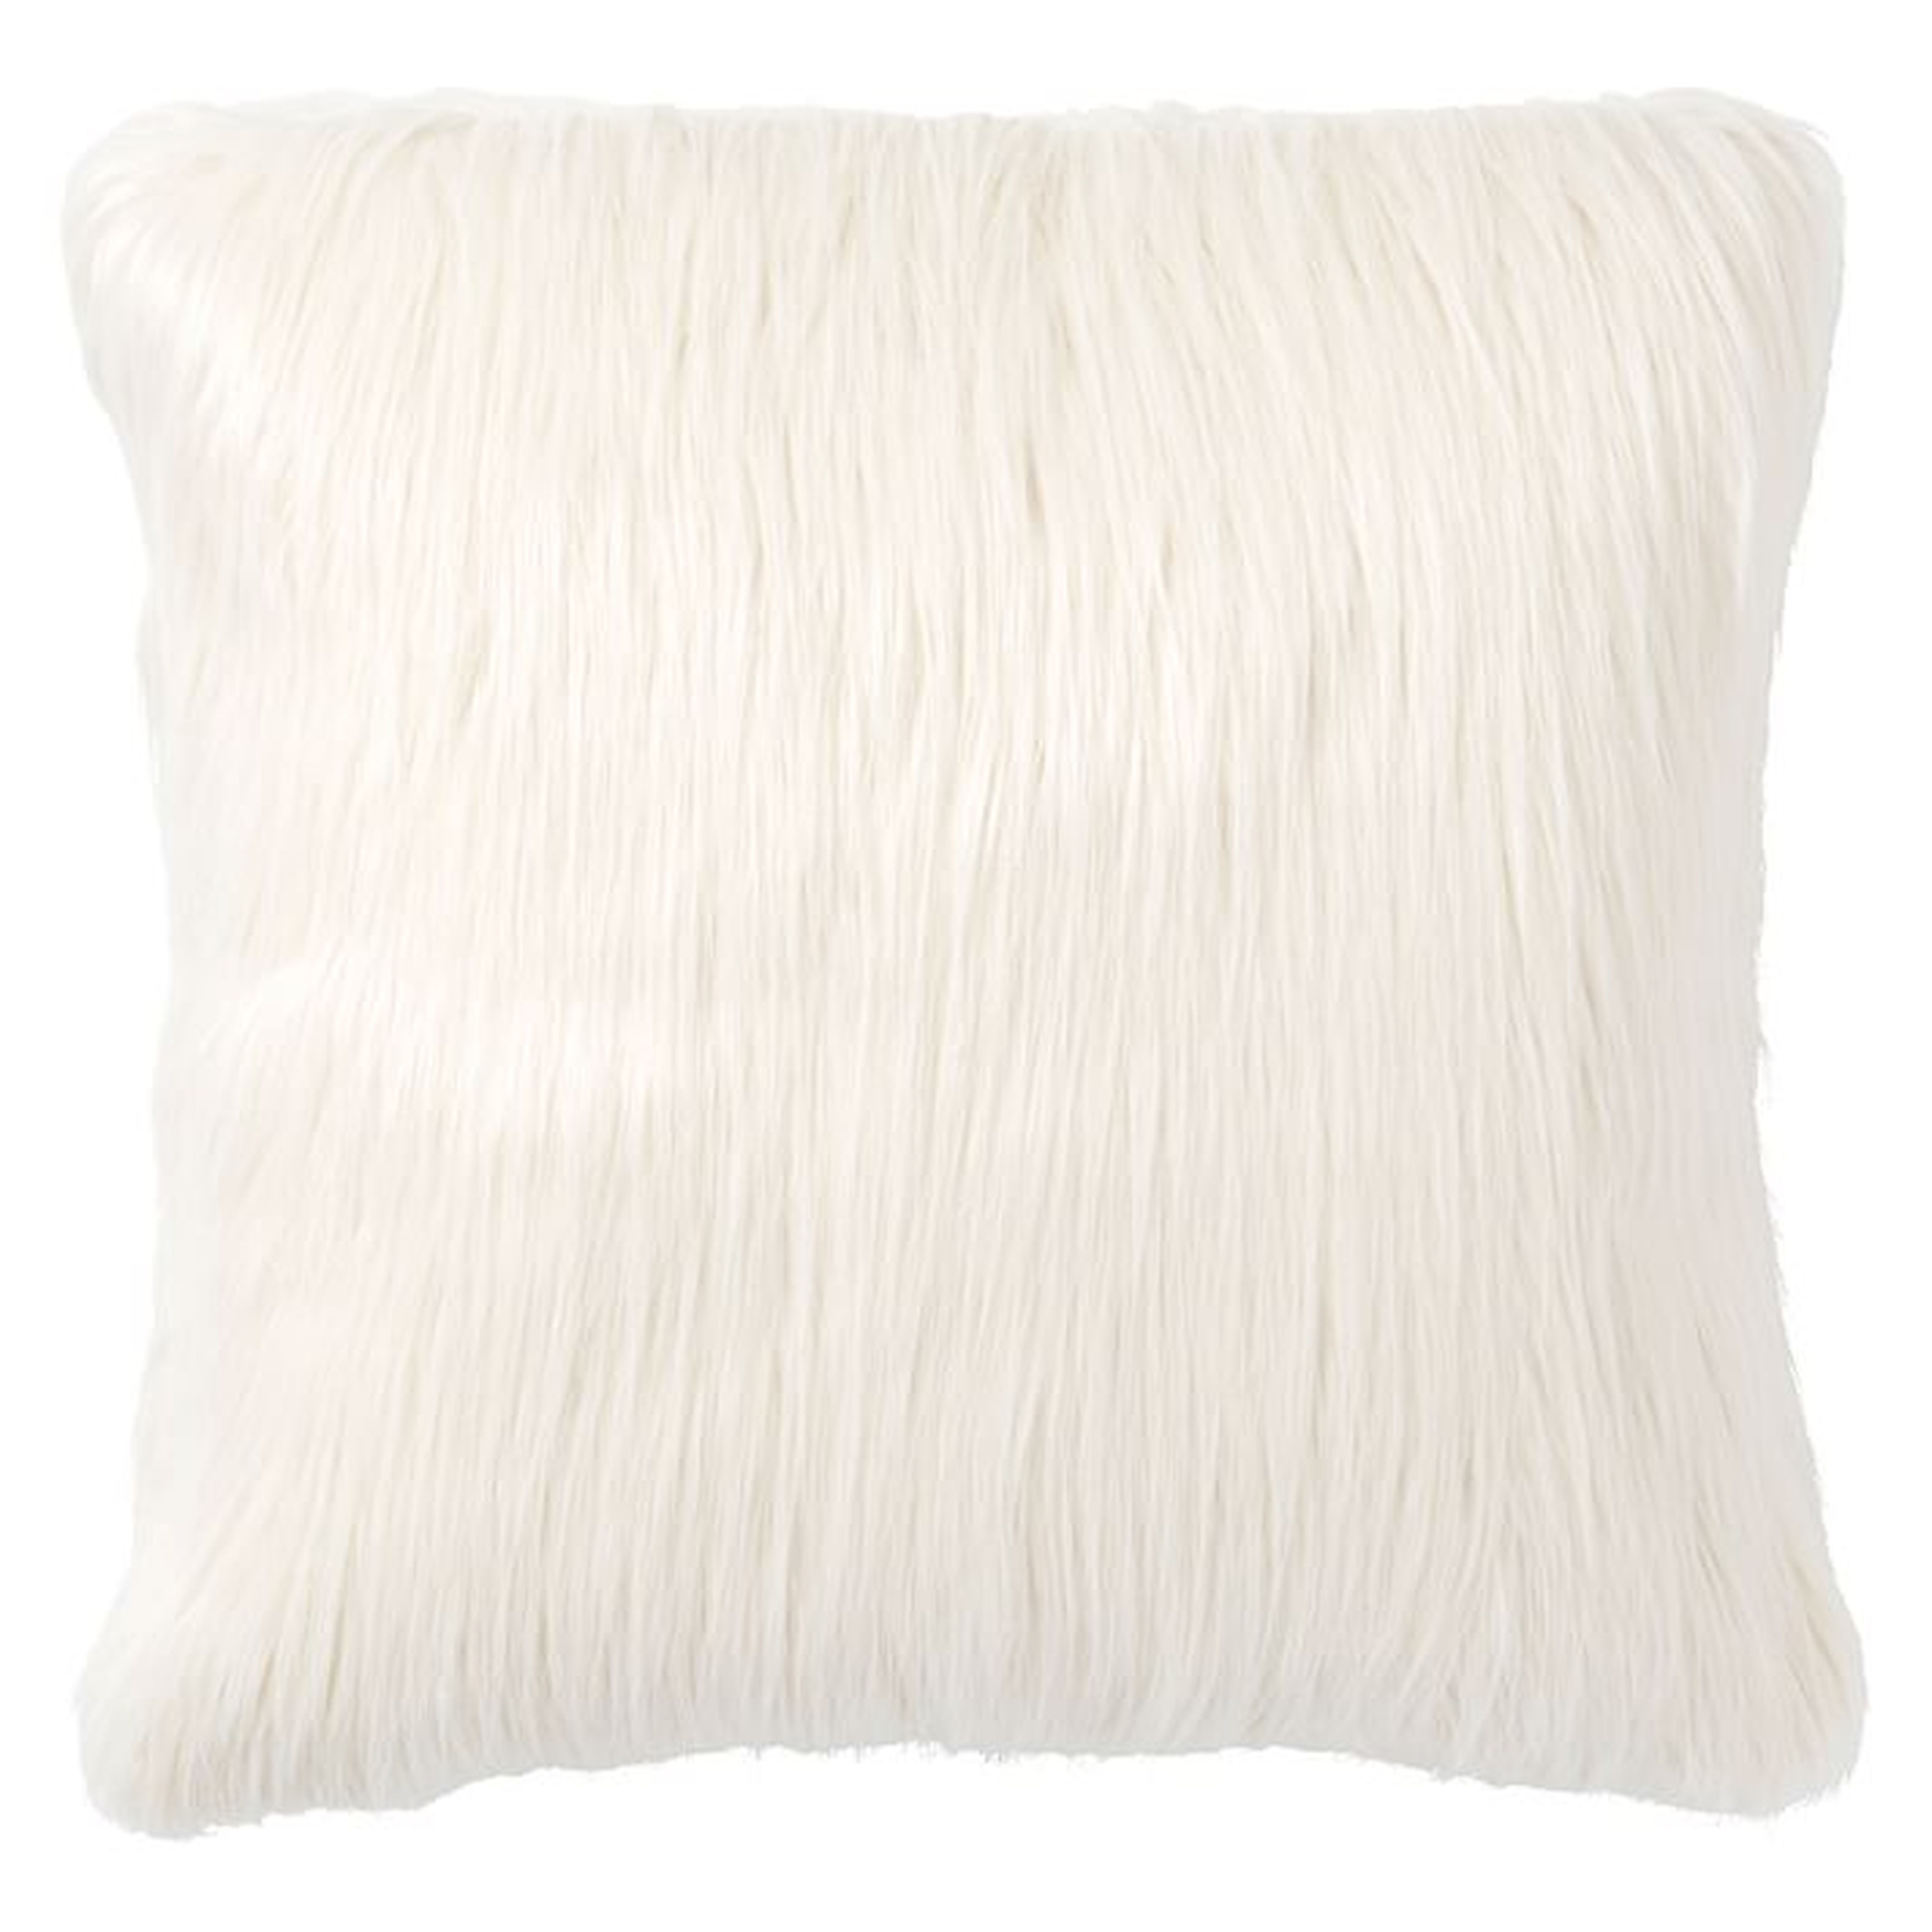 Fur-rific Faux-Fur Pillow Cover + Insert, Ivory - Pottery Barn Teen